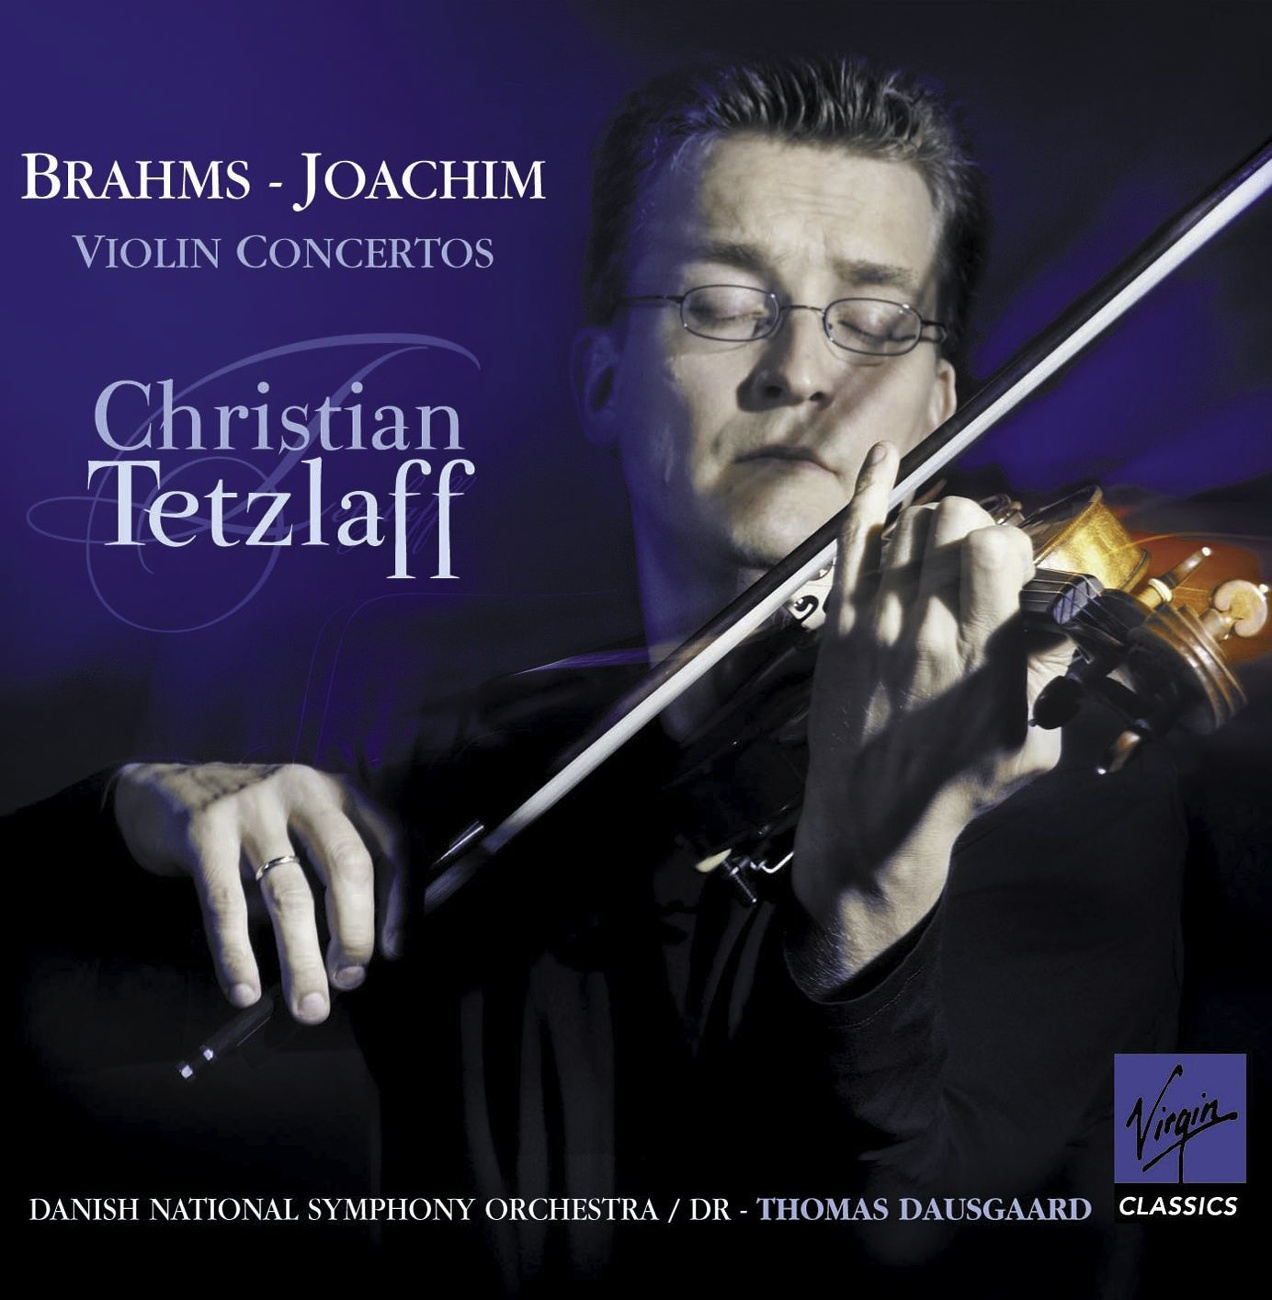 Concerto for Violin and Orchestra in D major opus 77: Adagio